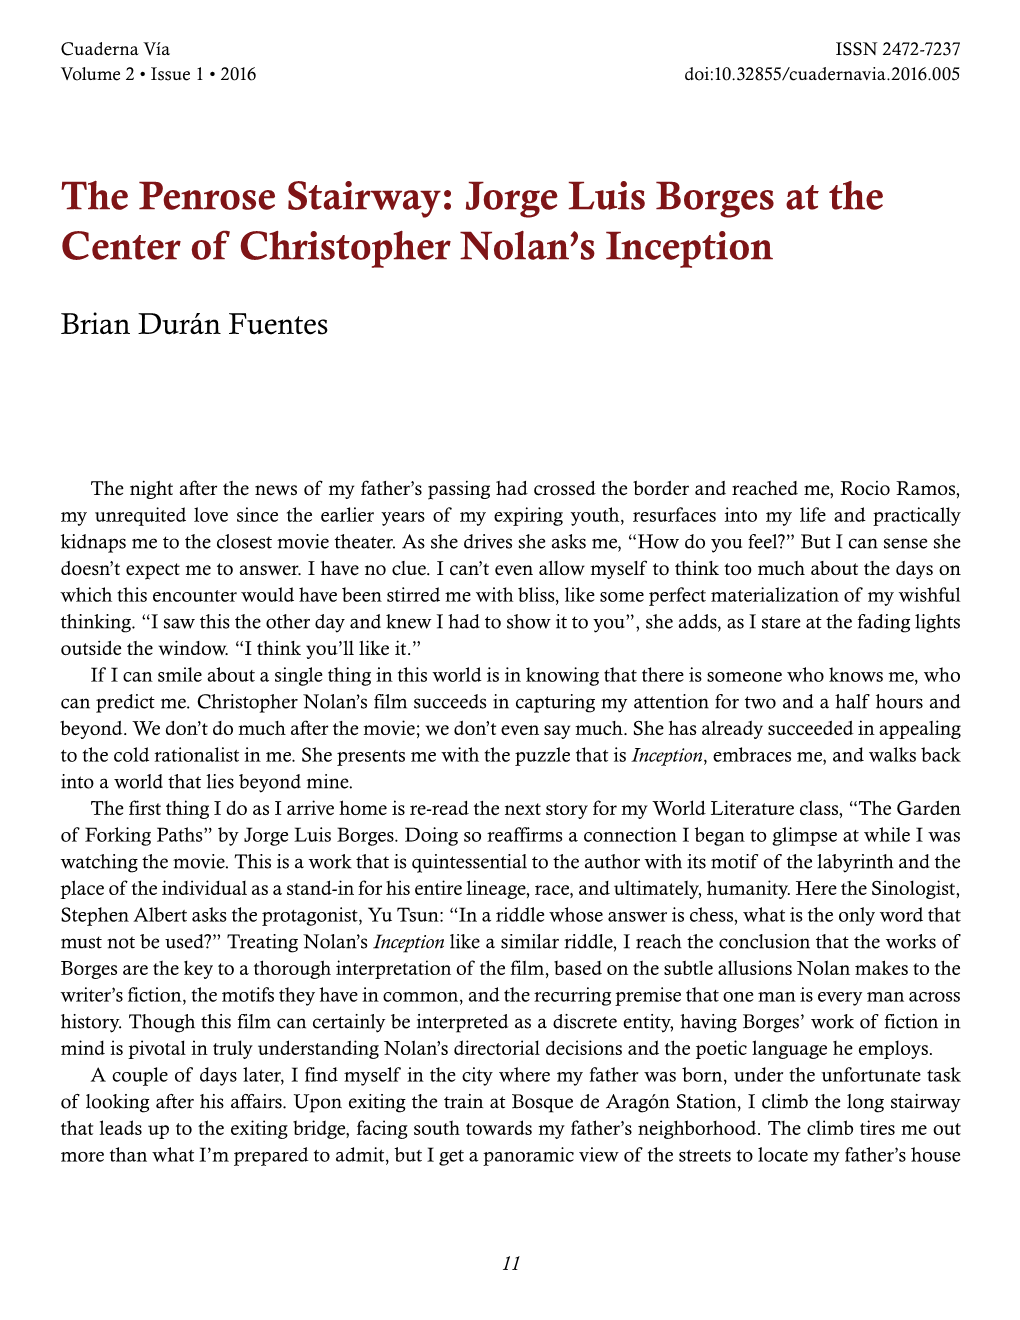 Jorge Luis Borges at the Center of Christopher Nolan's Inception